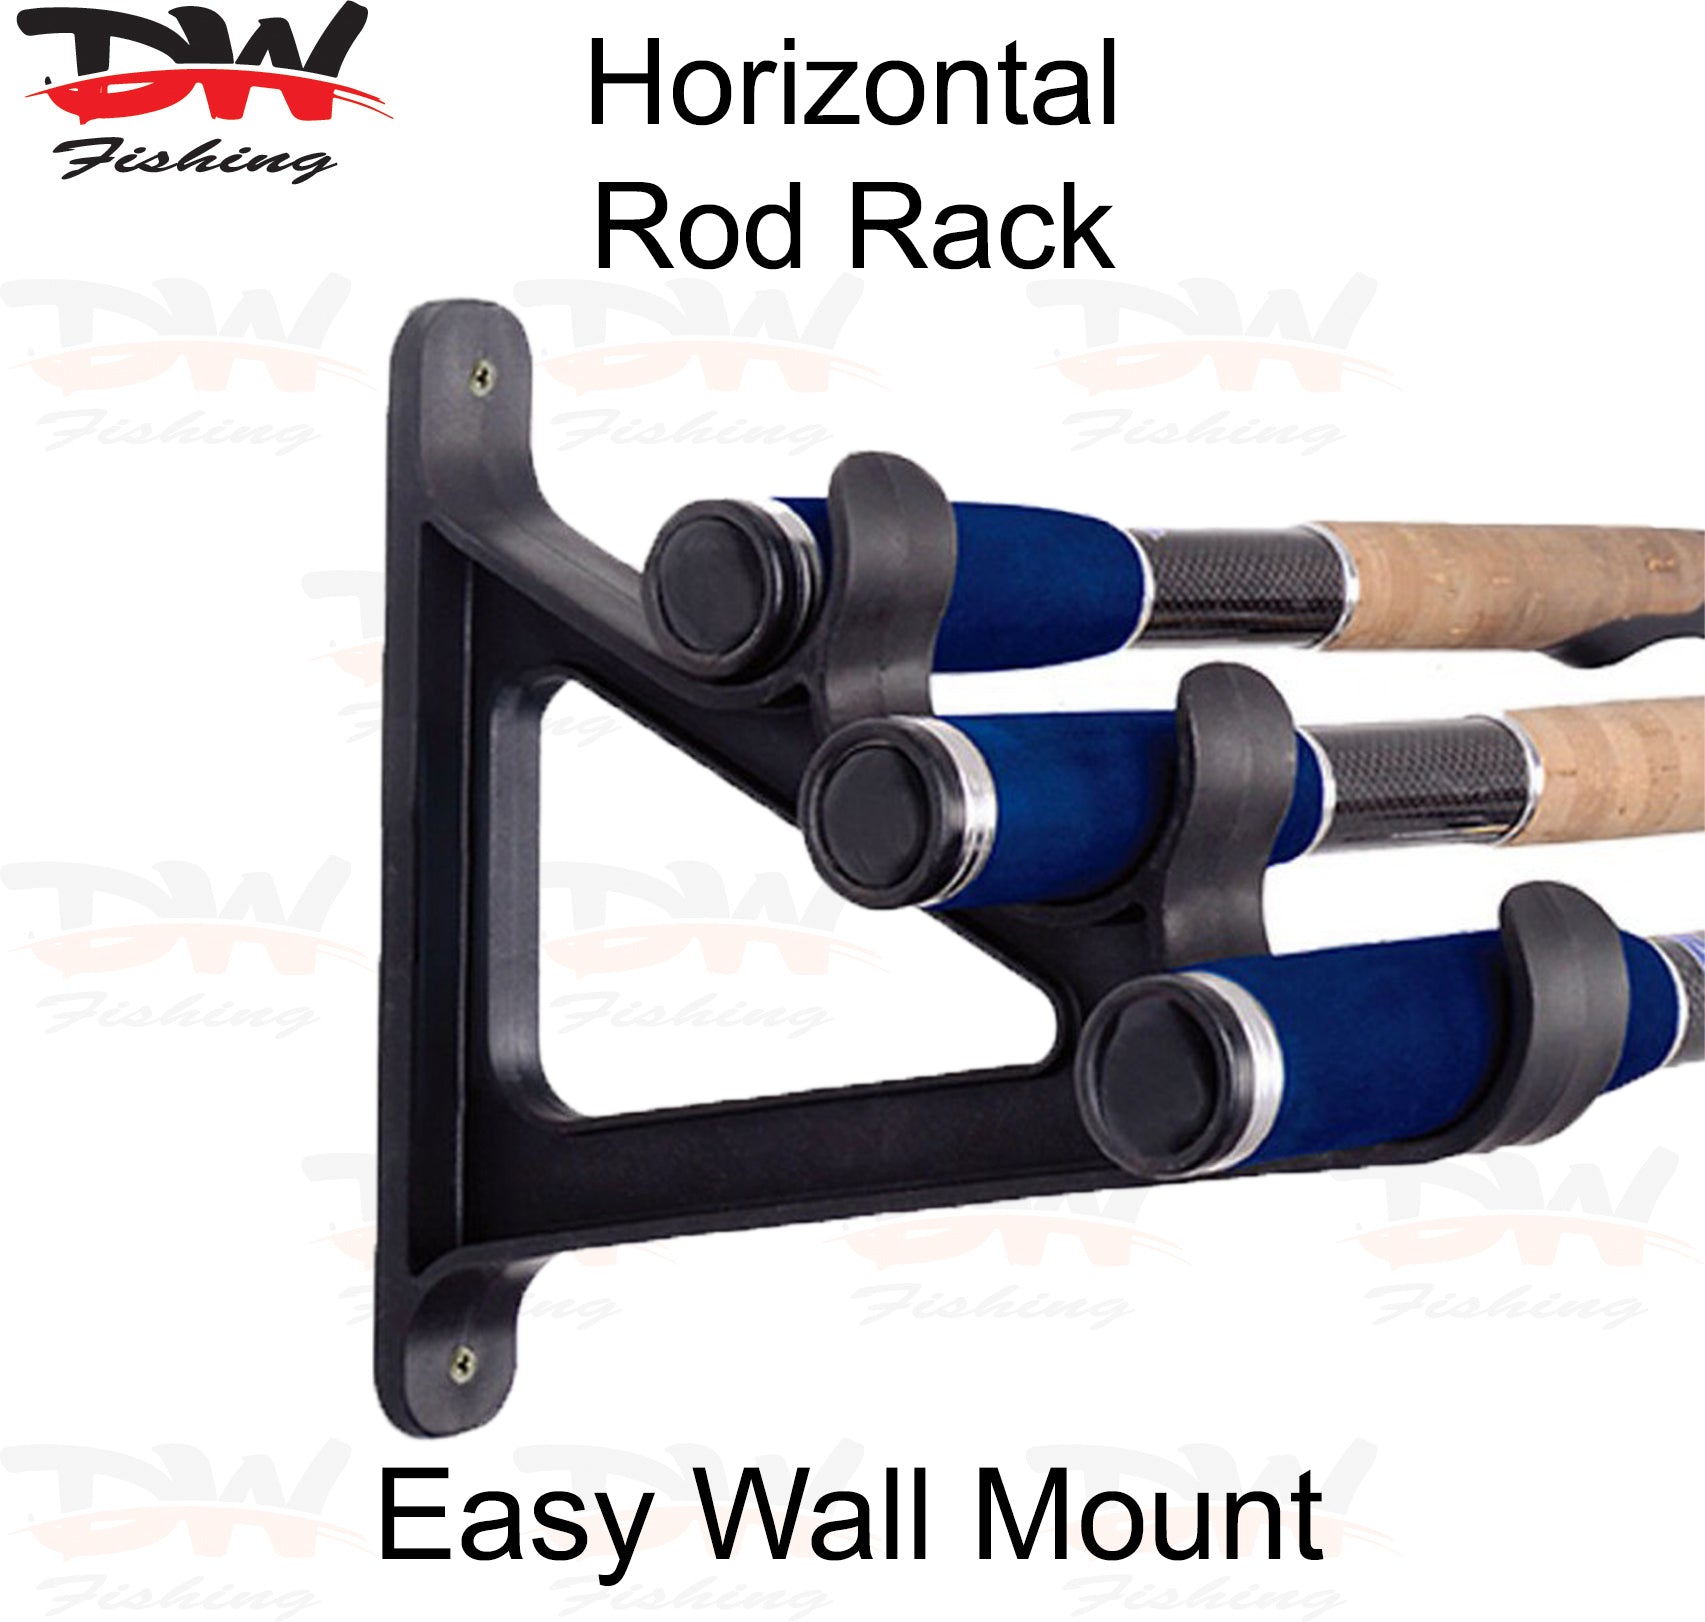 Horizontal wall mount rod holder system single bracket